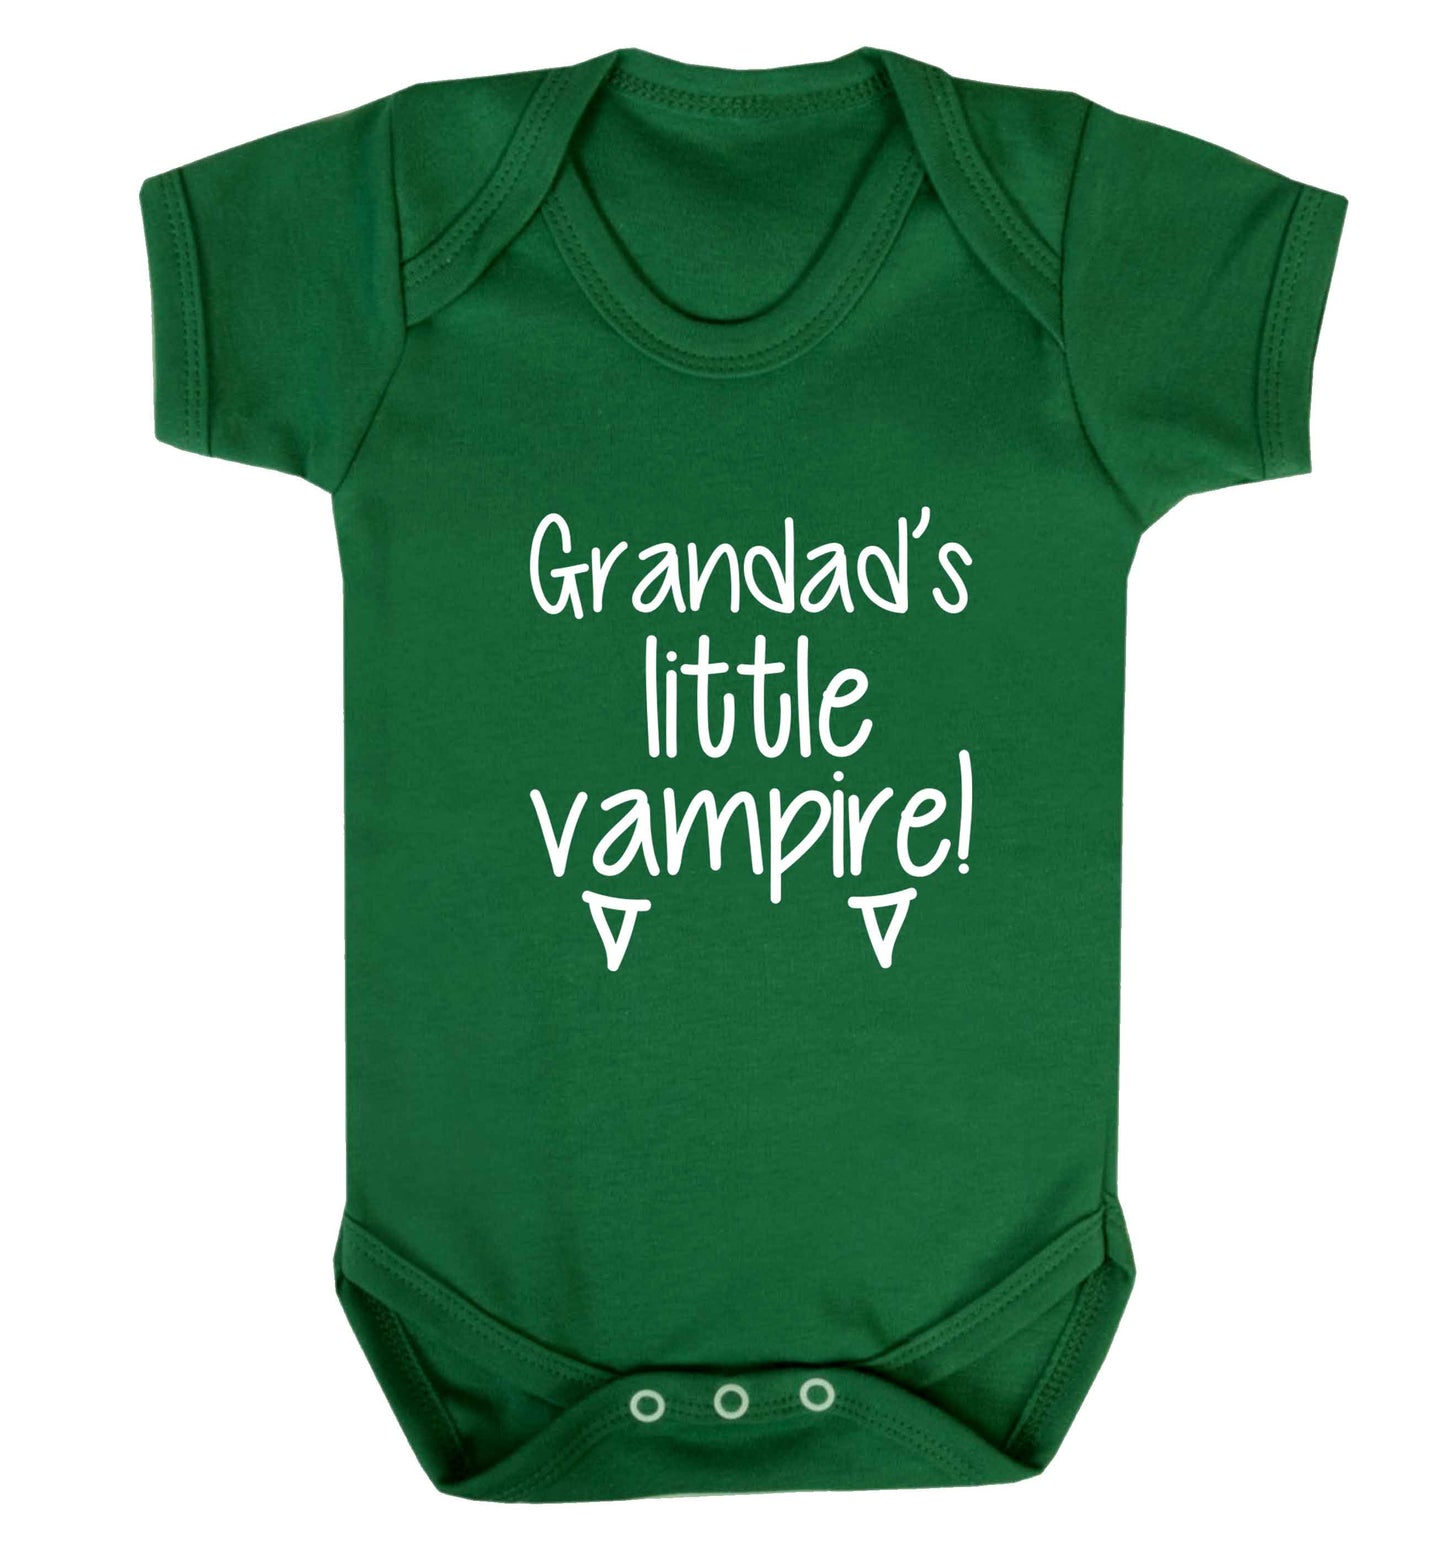 Grandad's little vampire baby vest green 18-24 months